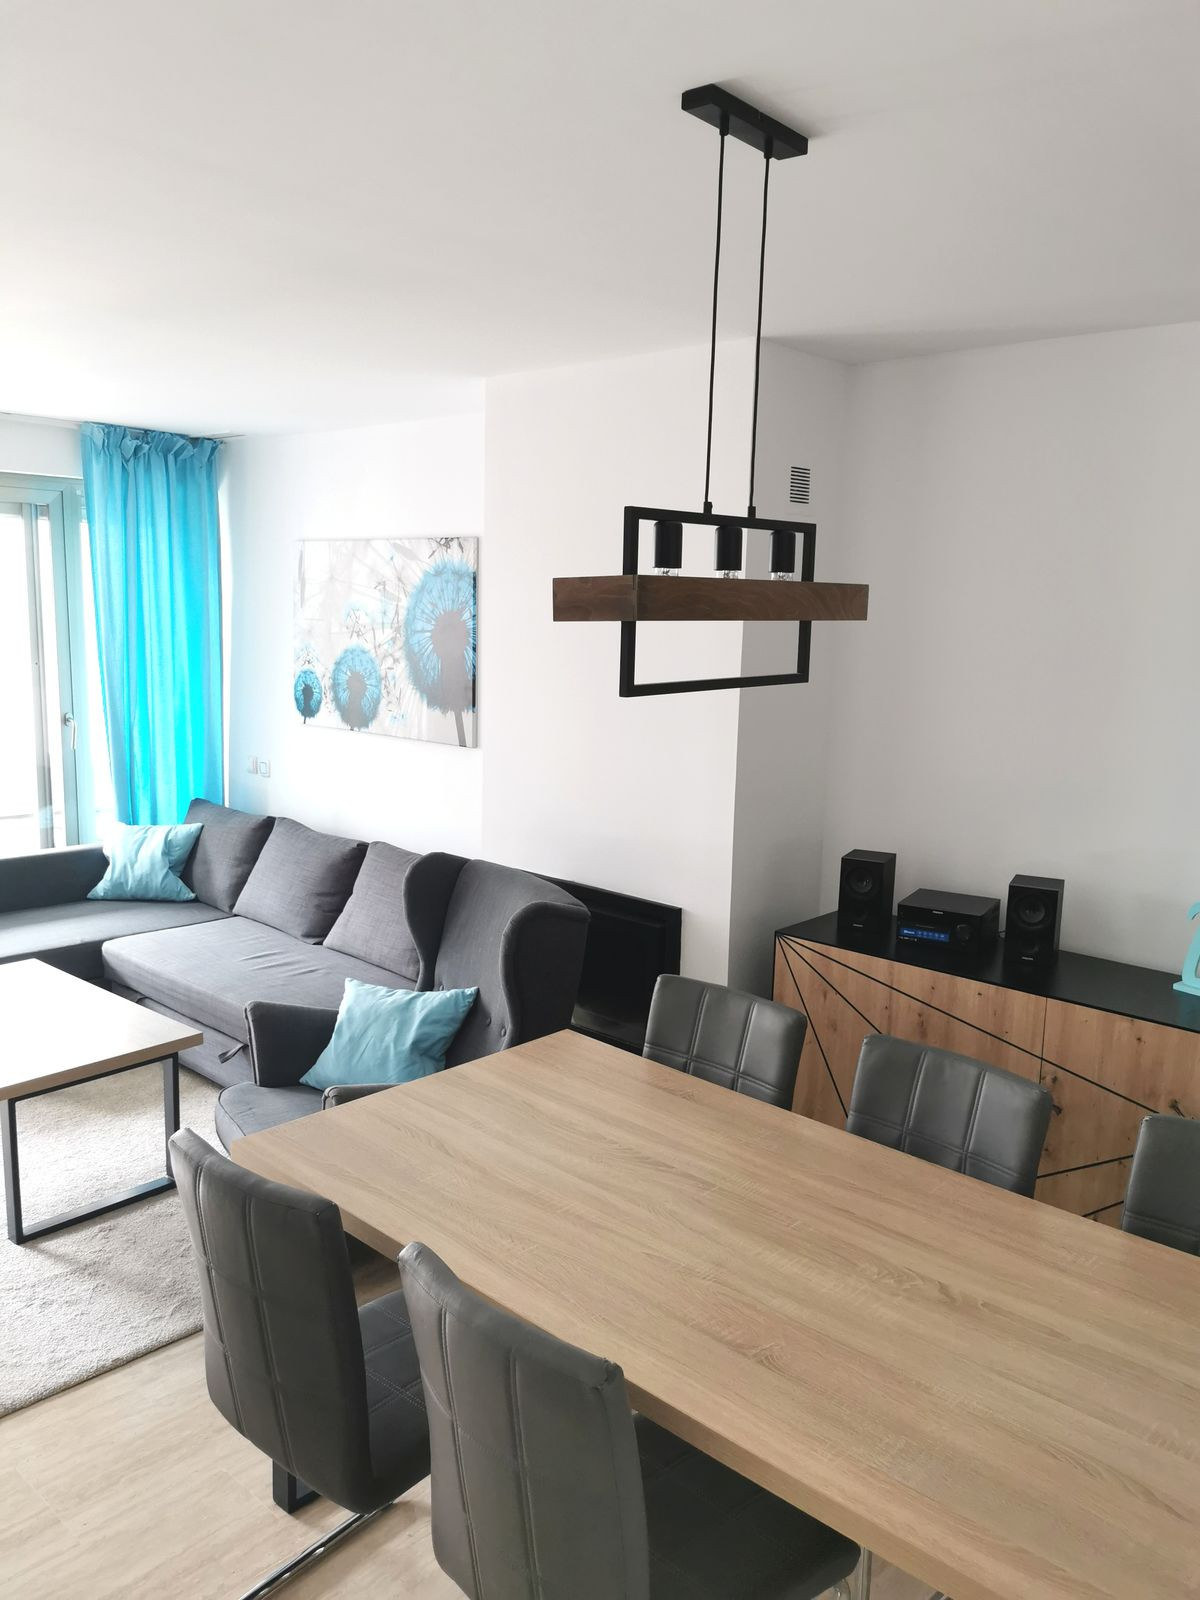 1 bedroom Apartment For Sale in Mijas, Málaga - thumb 24